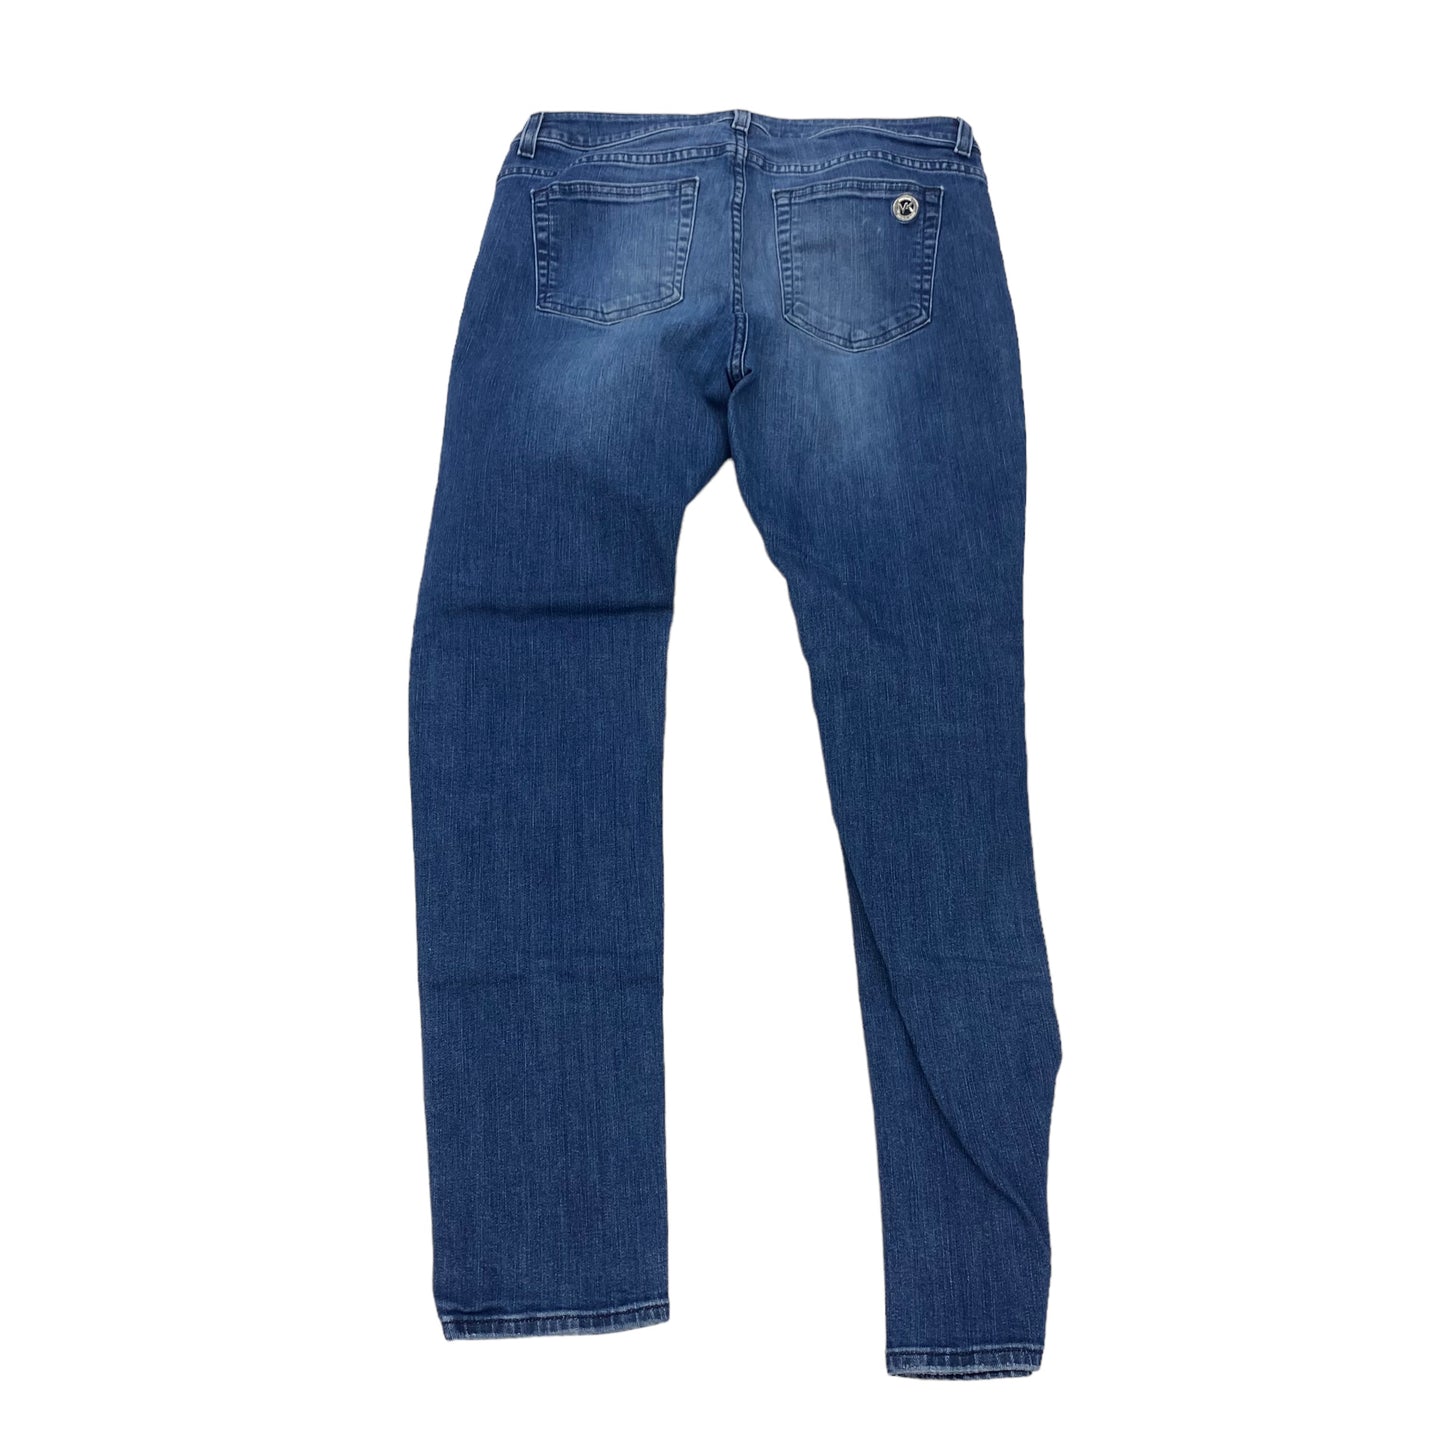 Jeans Designer By Michael Kors  Size: 6